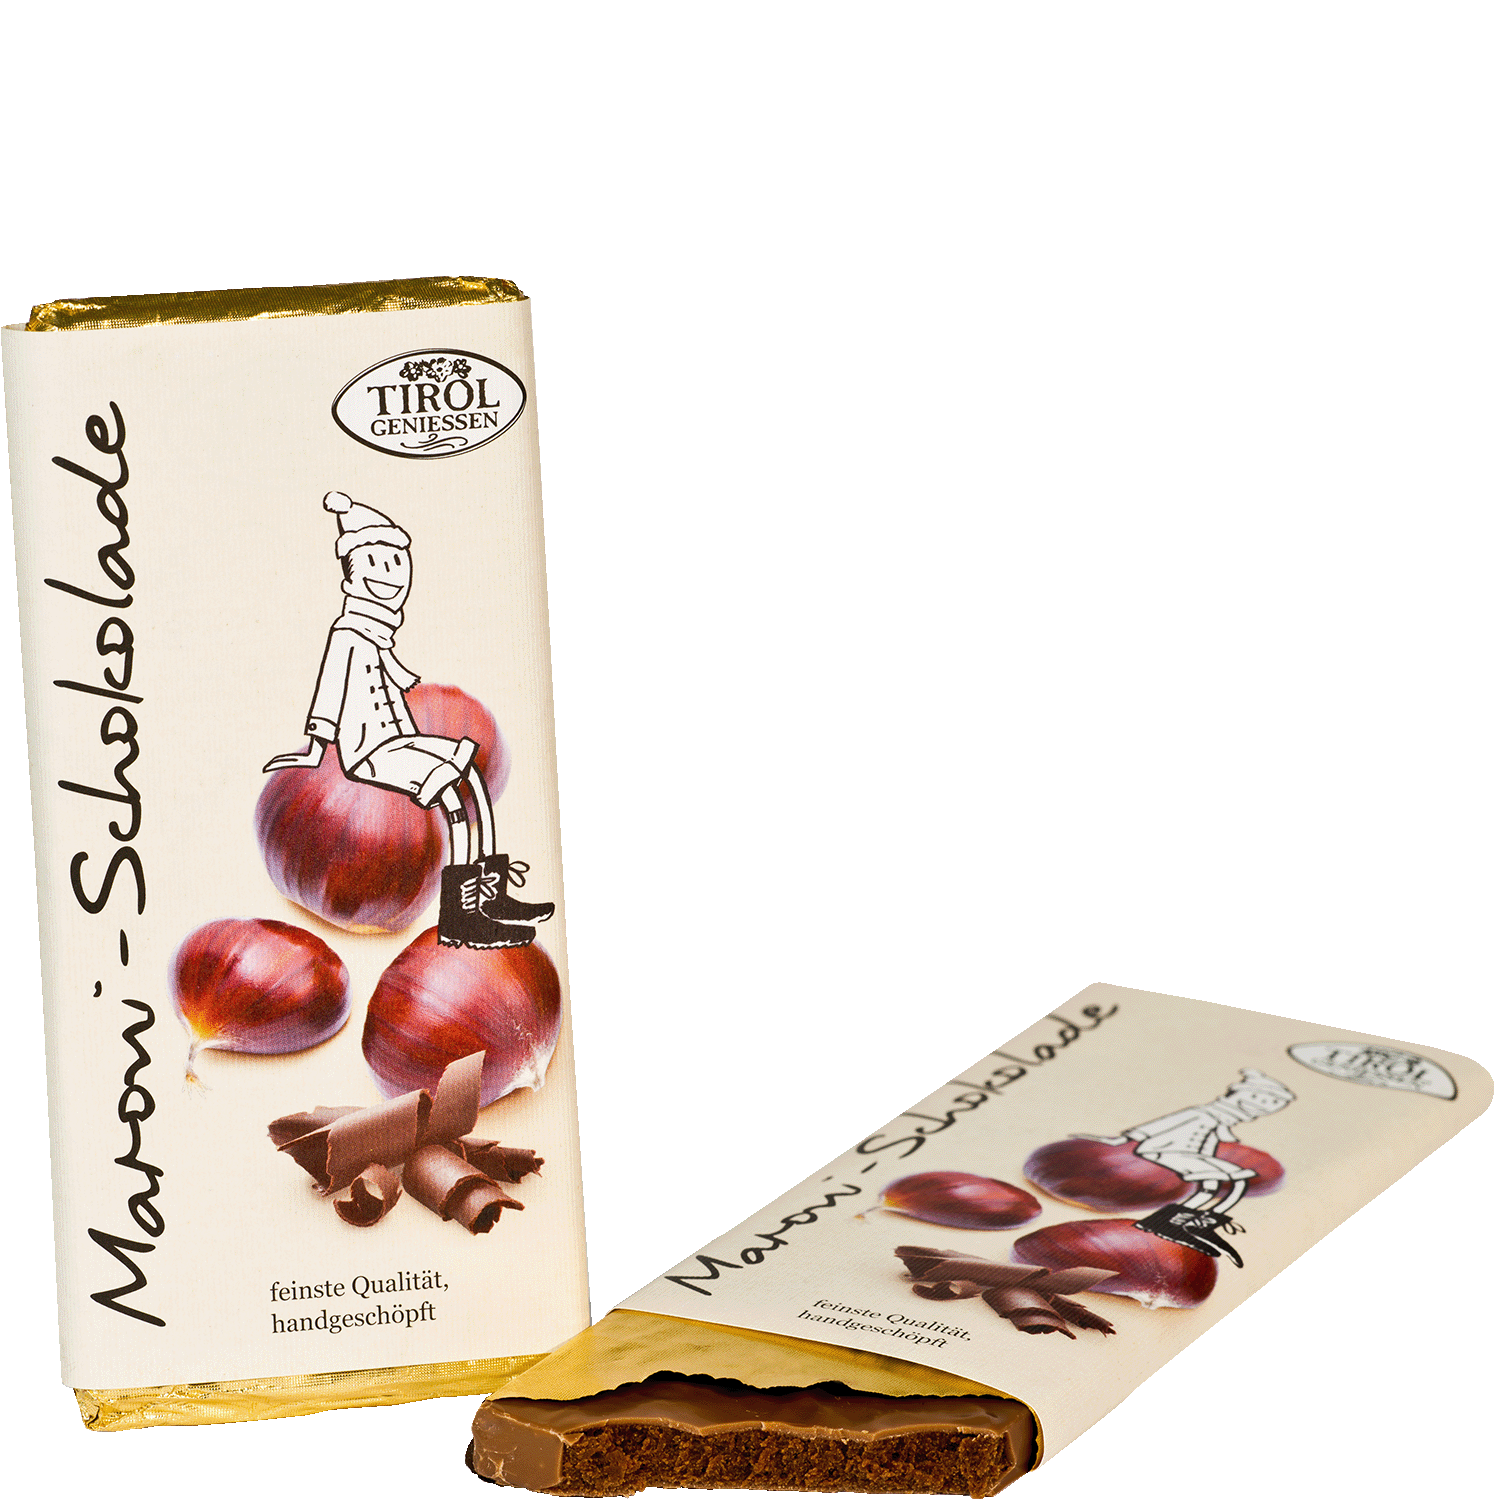 Roasted Chestnut Chocolate from Austria from Tirol Geniessen